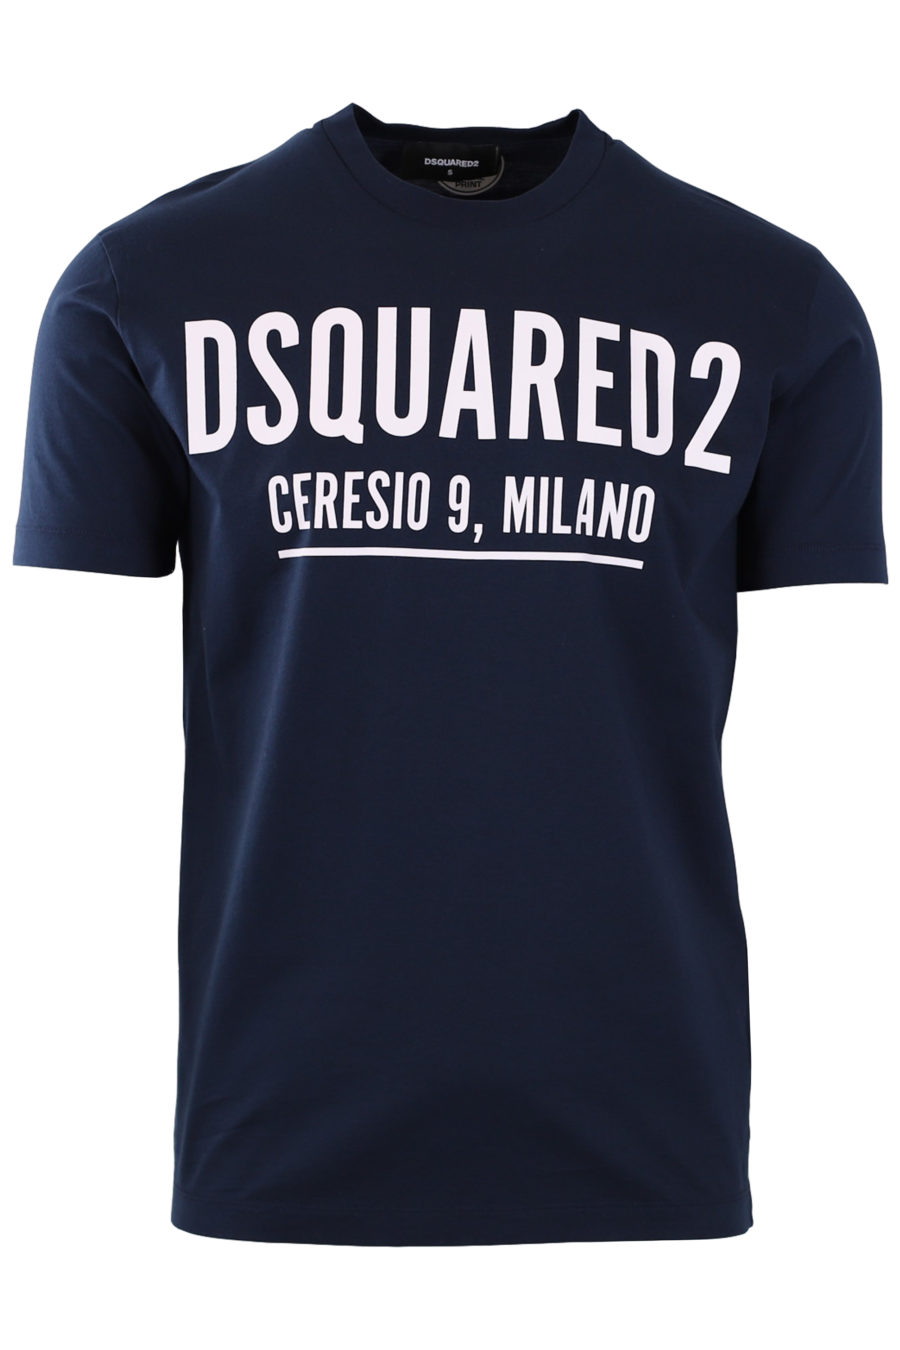 Blue T-shirt with white print "Ceresio 9 Milano" - d552c6739968ca1e4bcd272dcff11202a3f6c60f